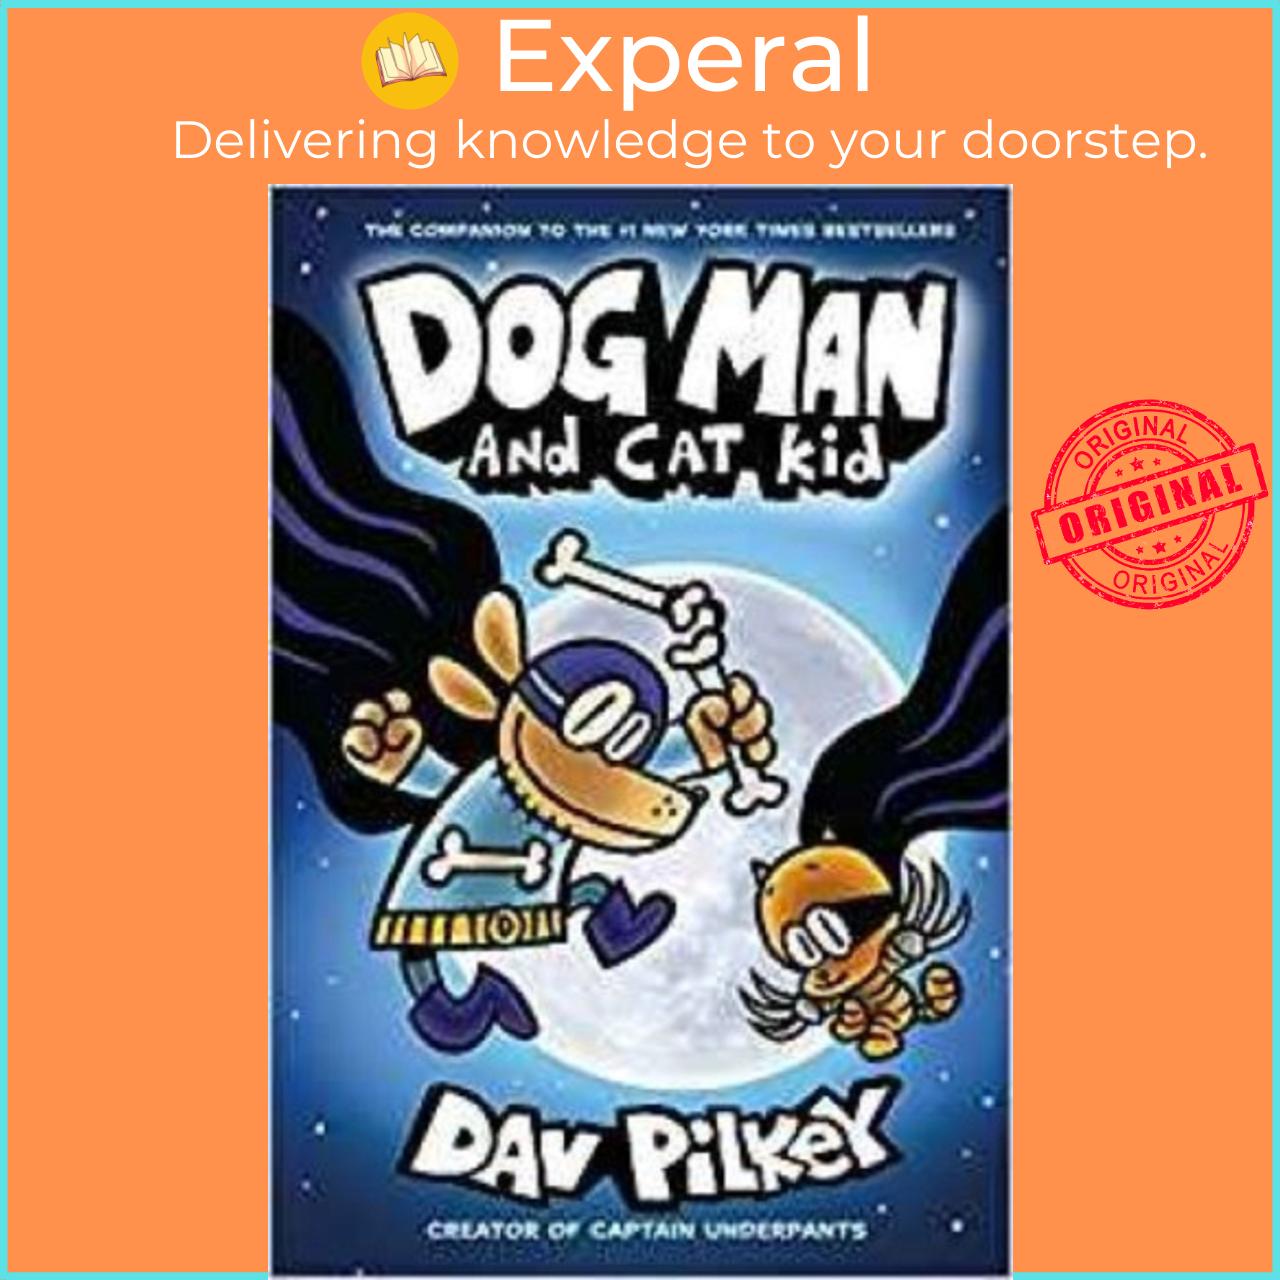 Sách - Dog Man 4: Dog Man and Cat Kid by unknown,Dav Pilkey (UK edition, paperback)